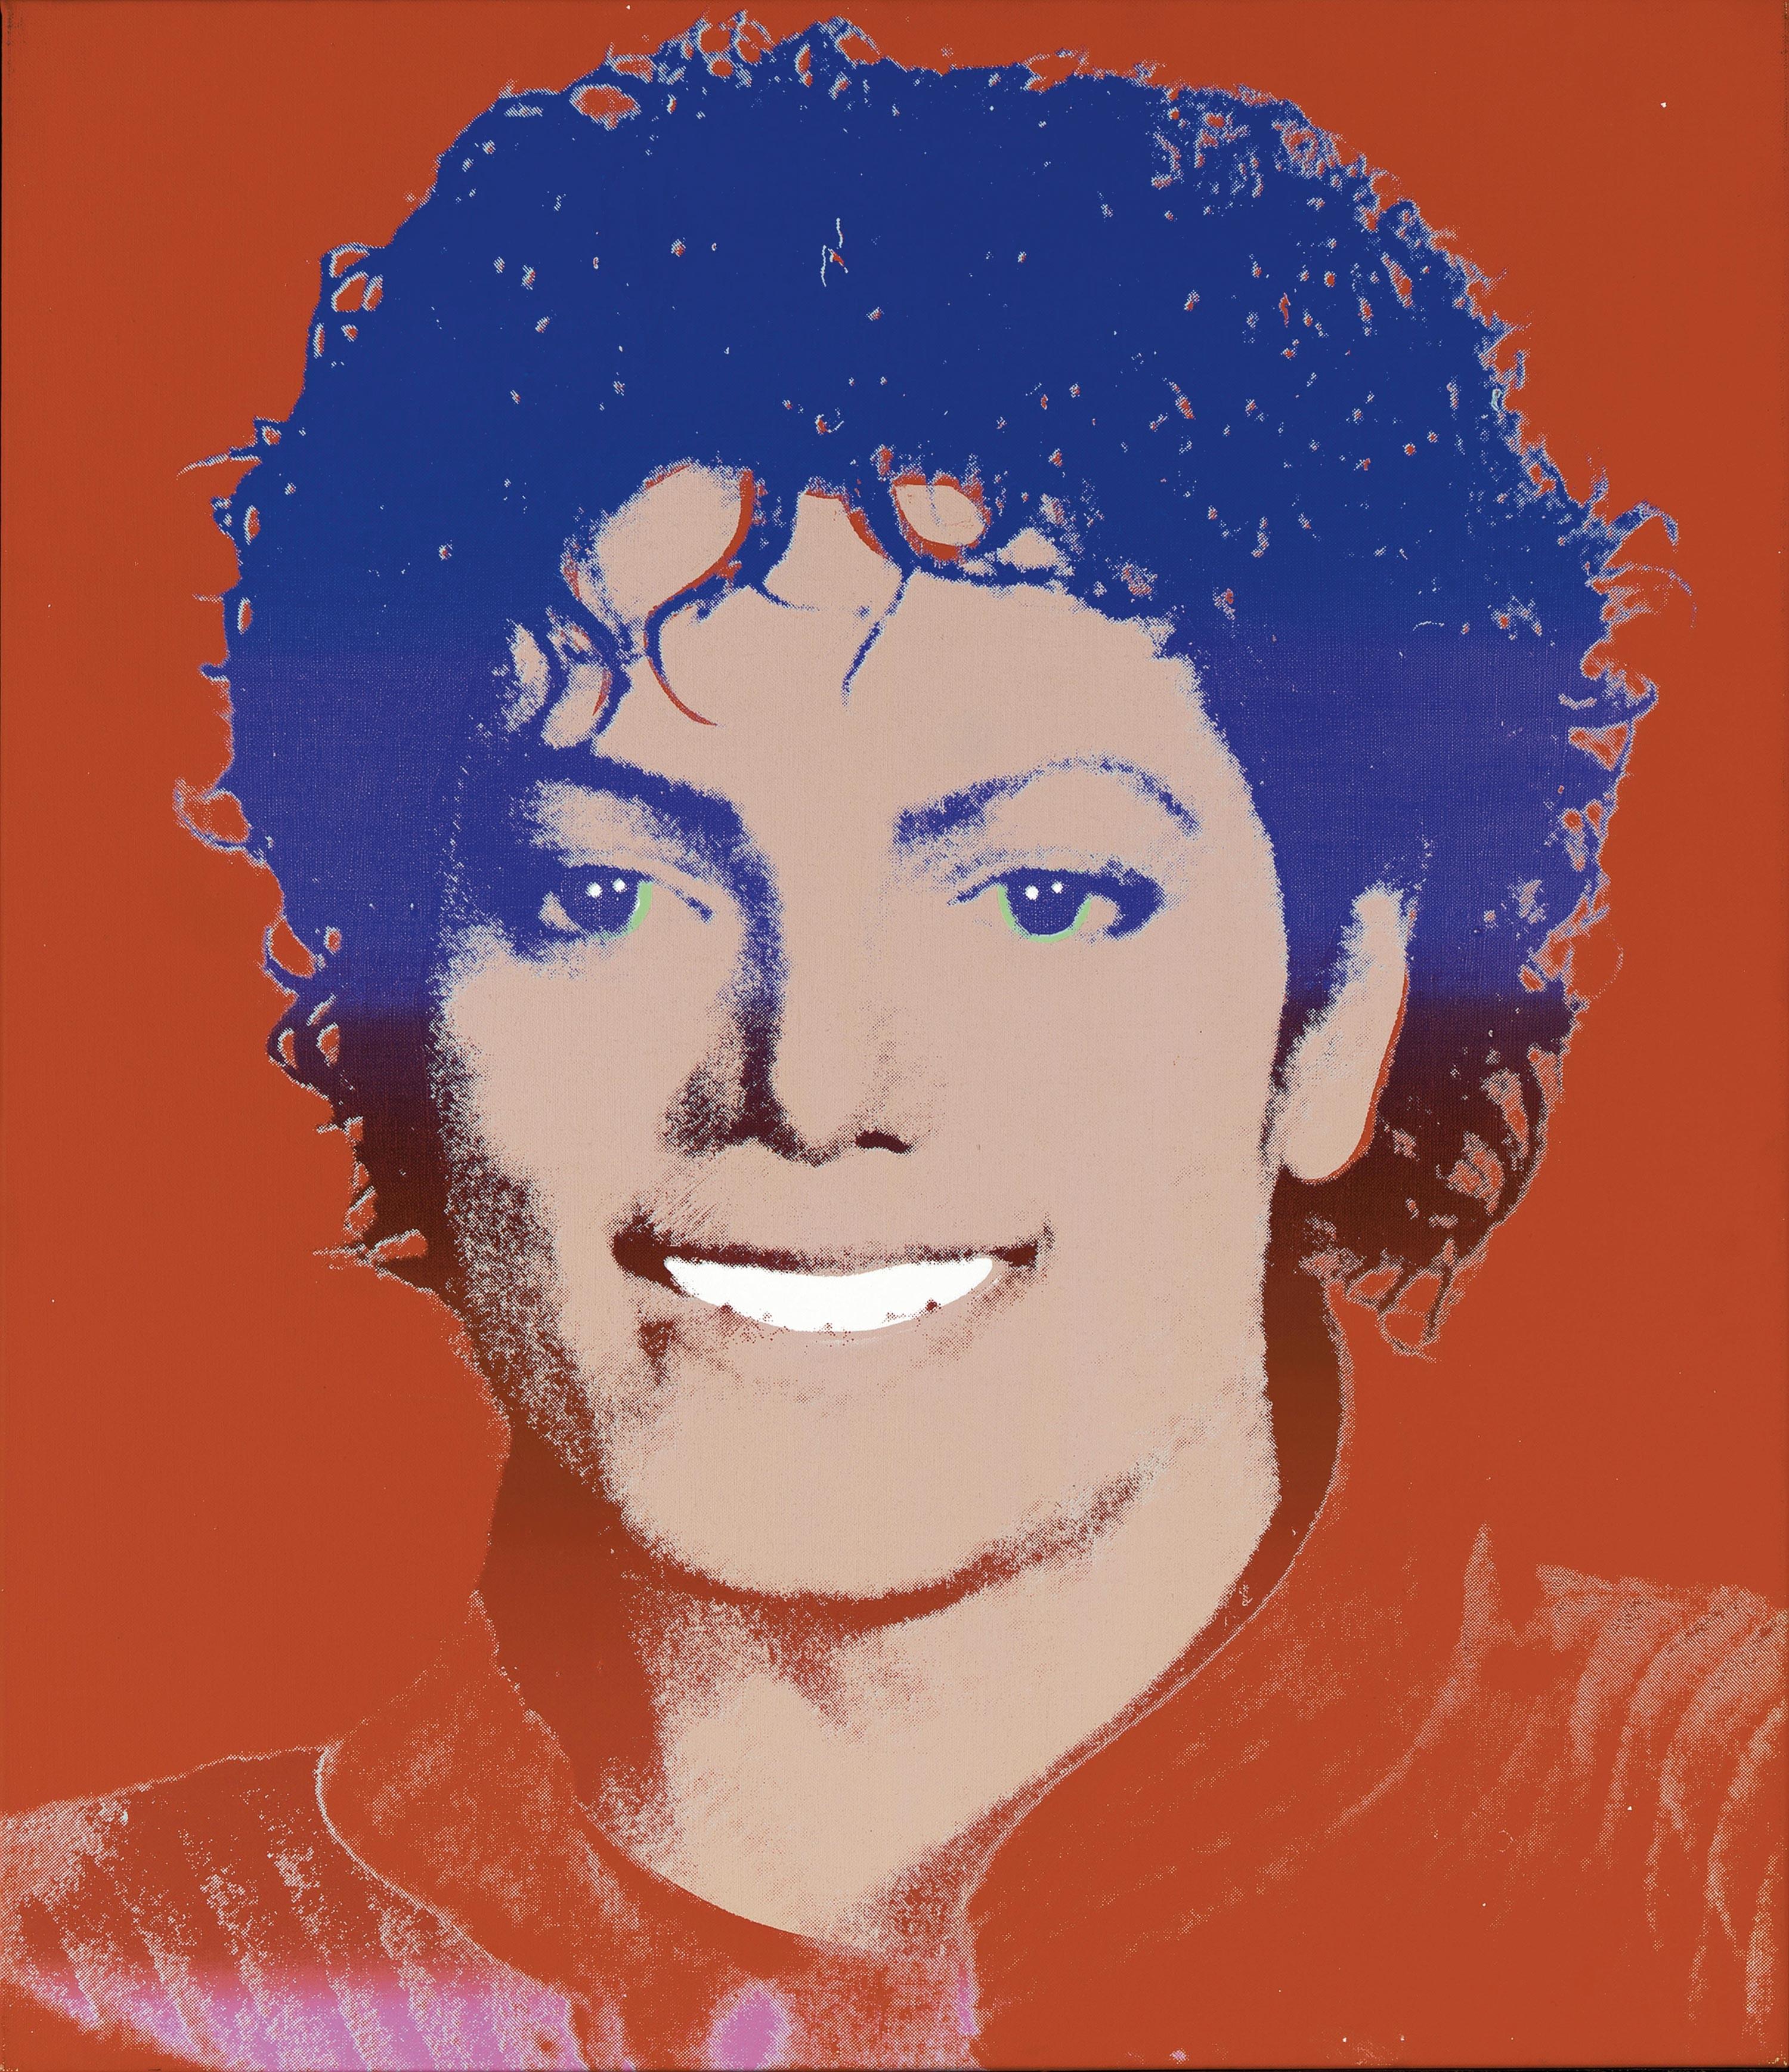 Michael Jackson by Andy Warhol